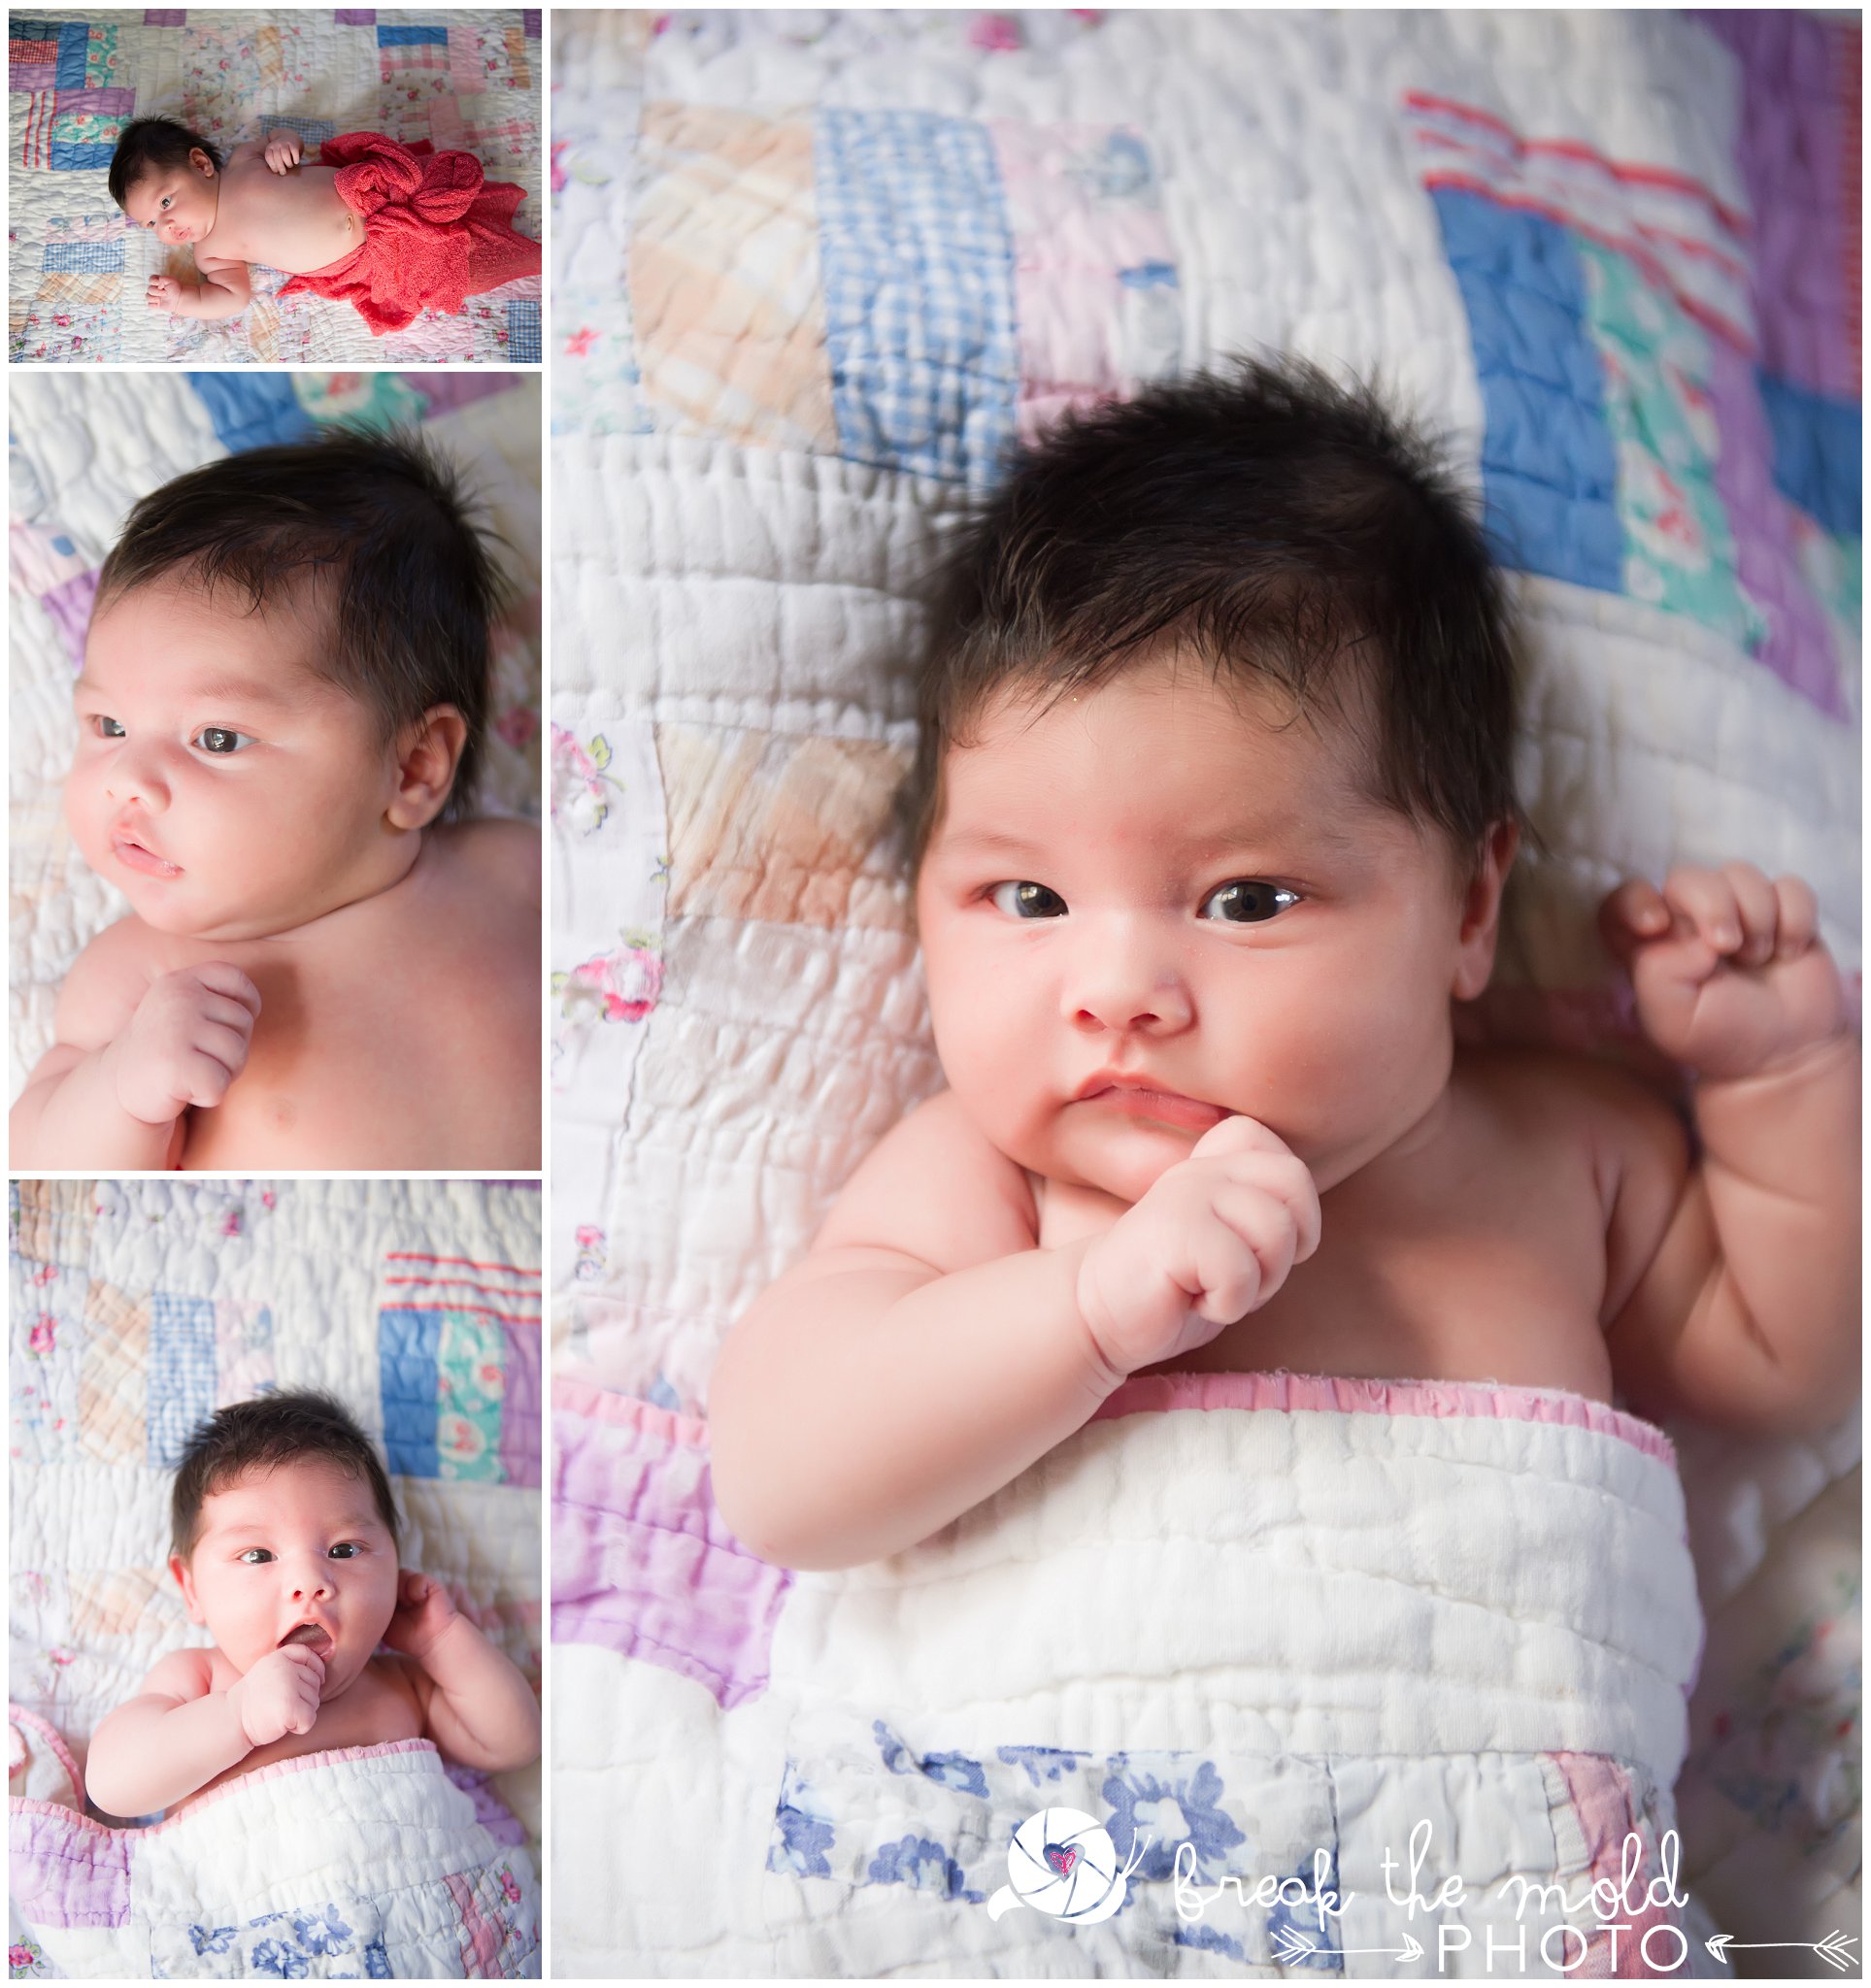 break-the-mold-photo-knoxville-newborn-photographer-creative-affordable-newborn-baby_2883.jpg